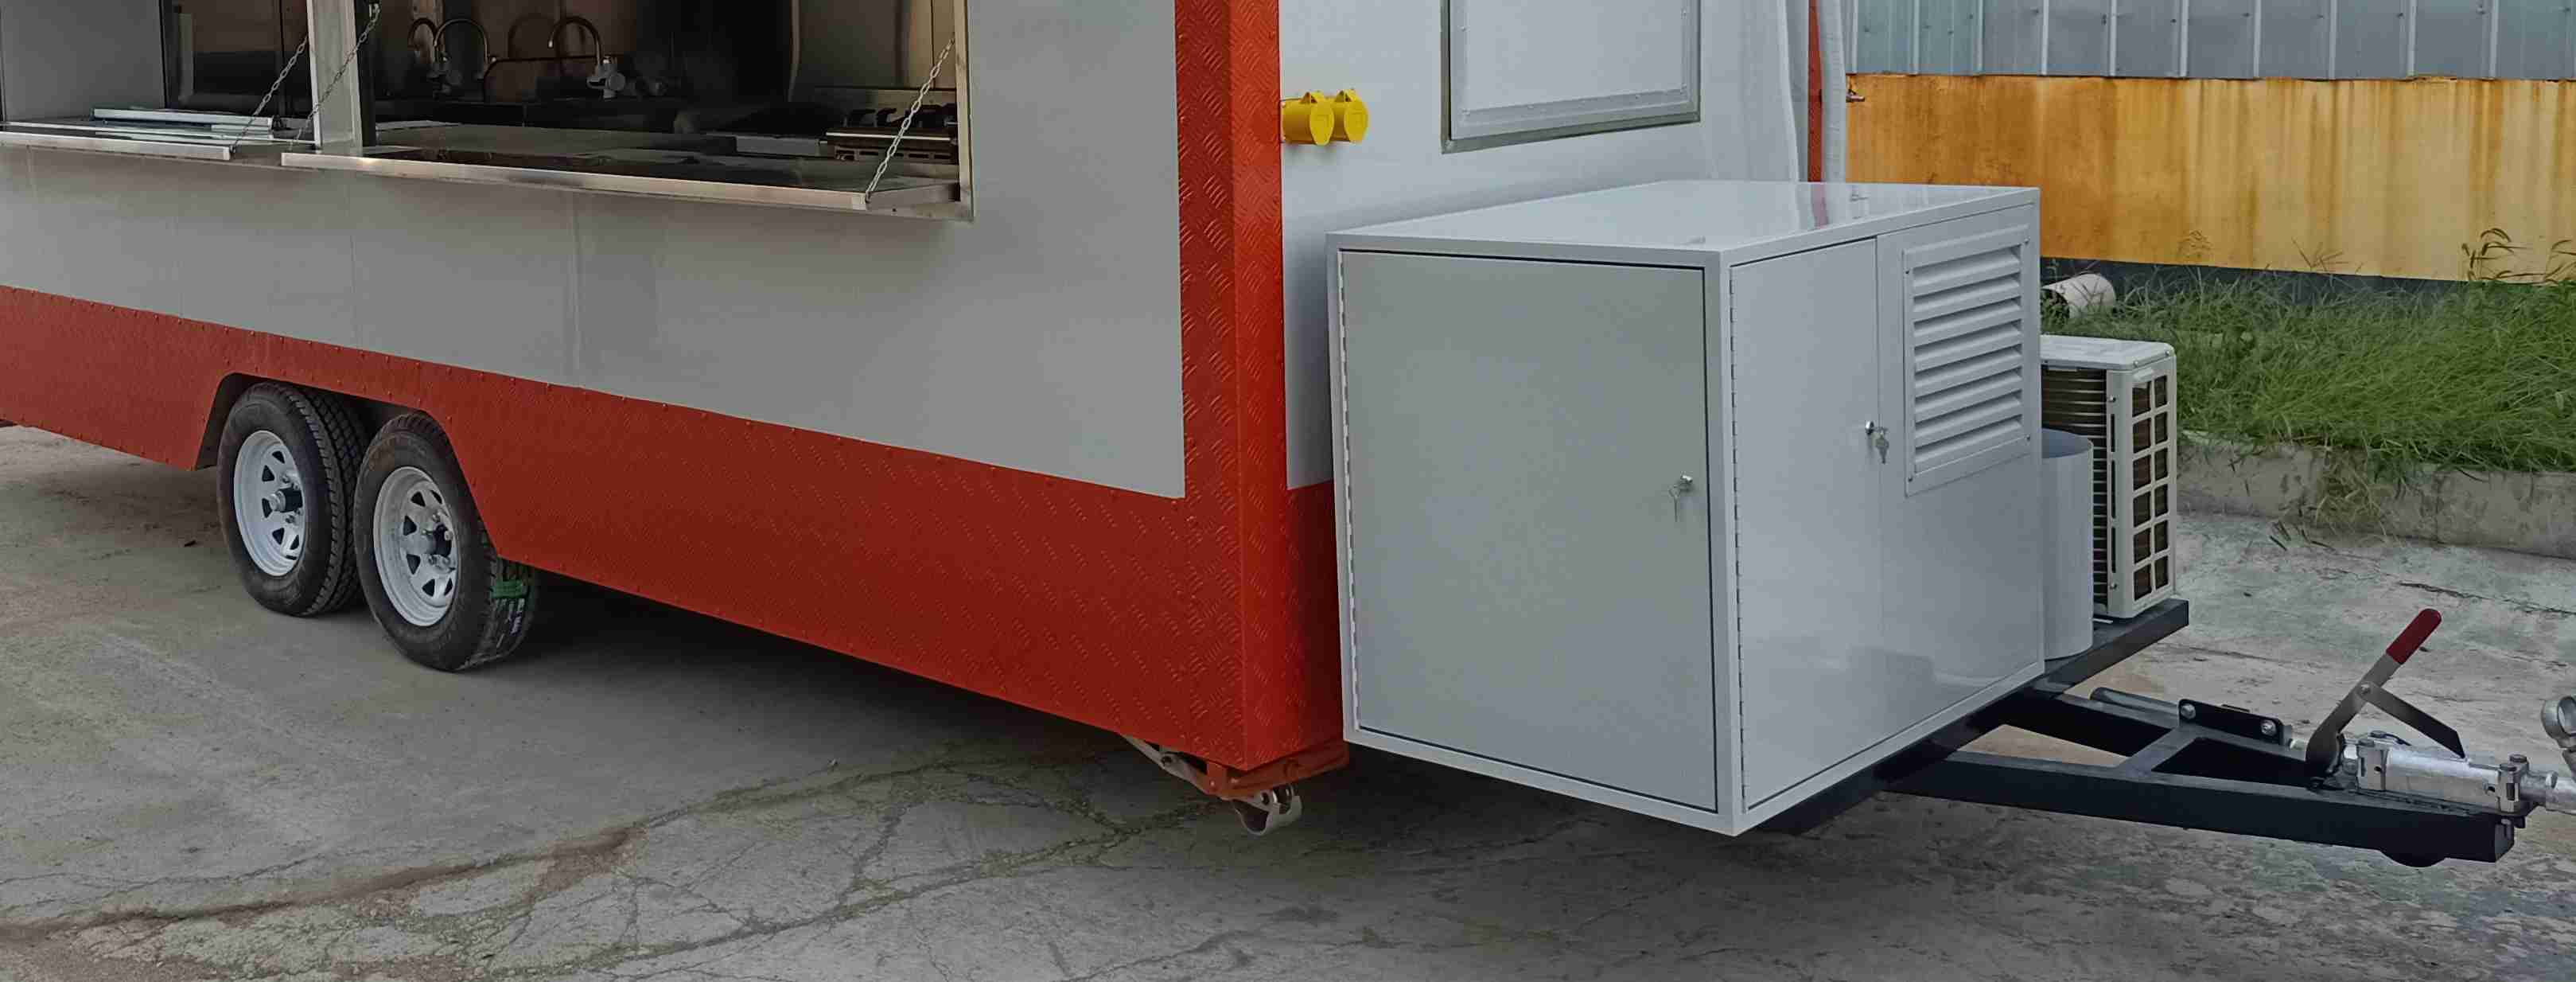 generator box for food trailer